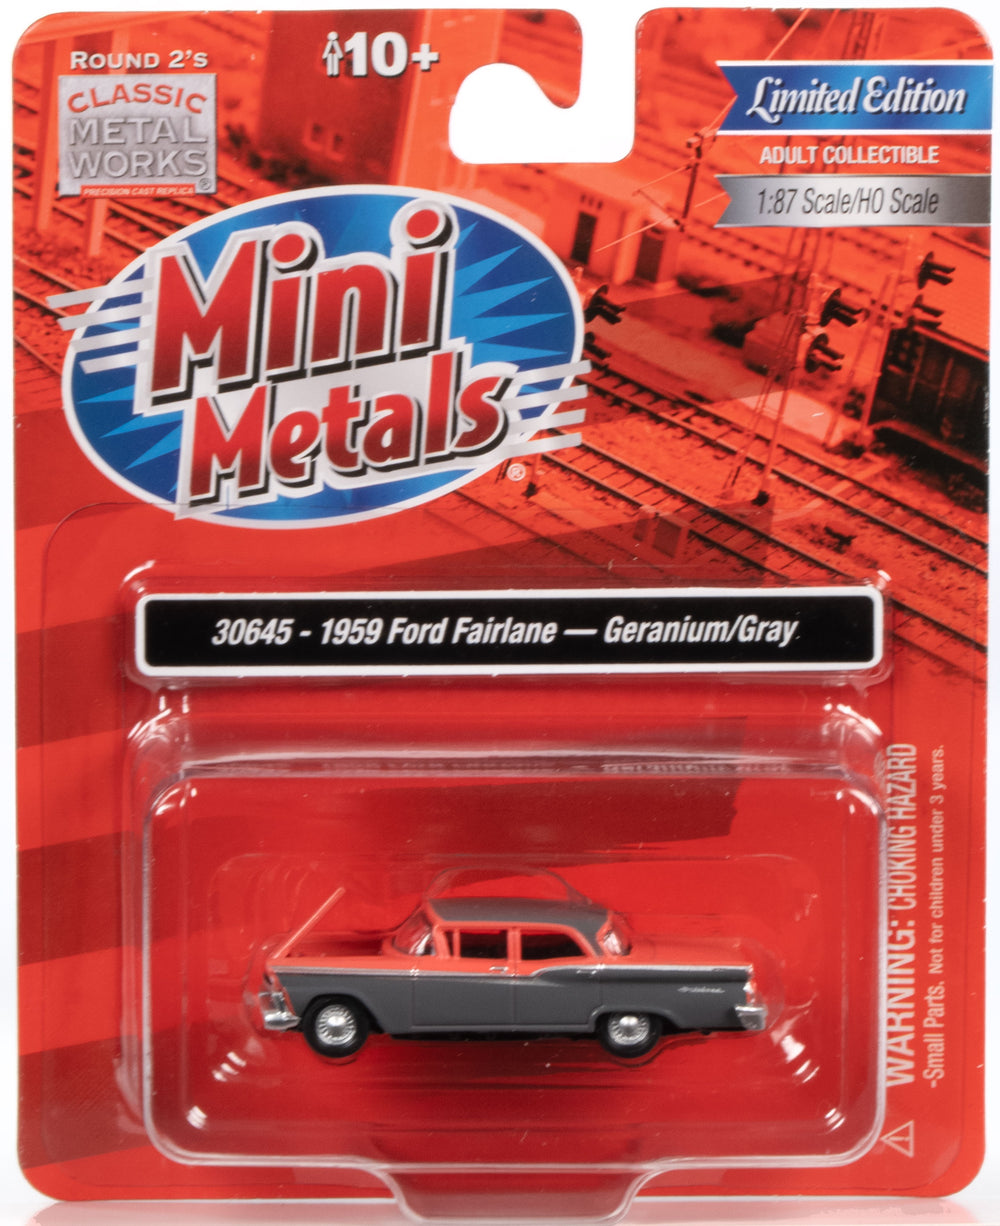 Classic Metal Works 1959 Ford Fairlane (Geranium/Gunsmoke Gray) 1:87 HO Scale